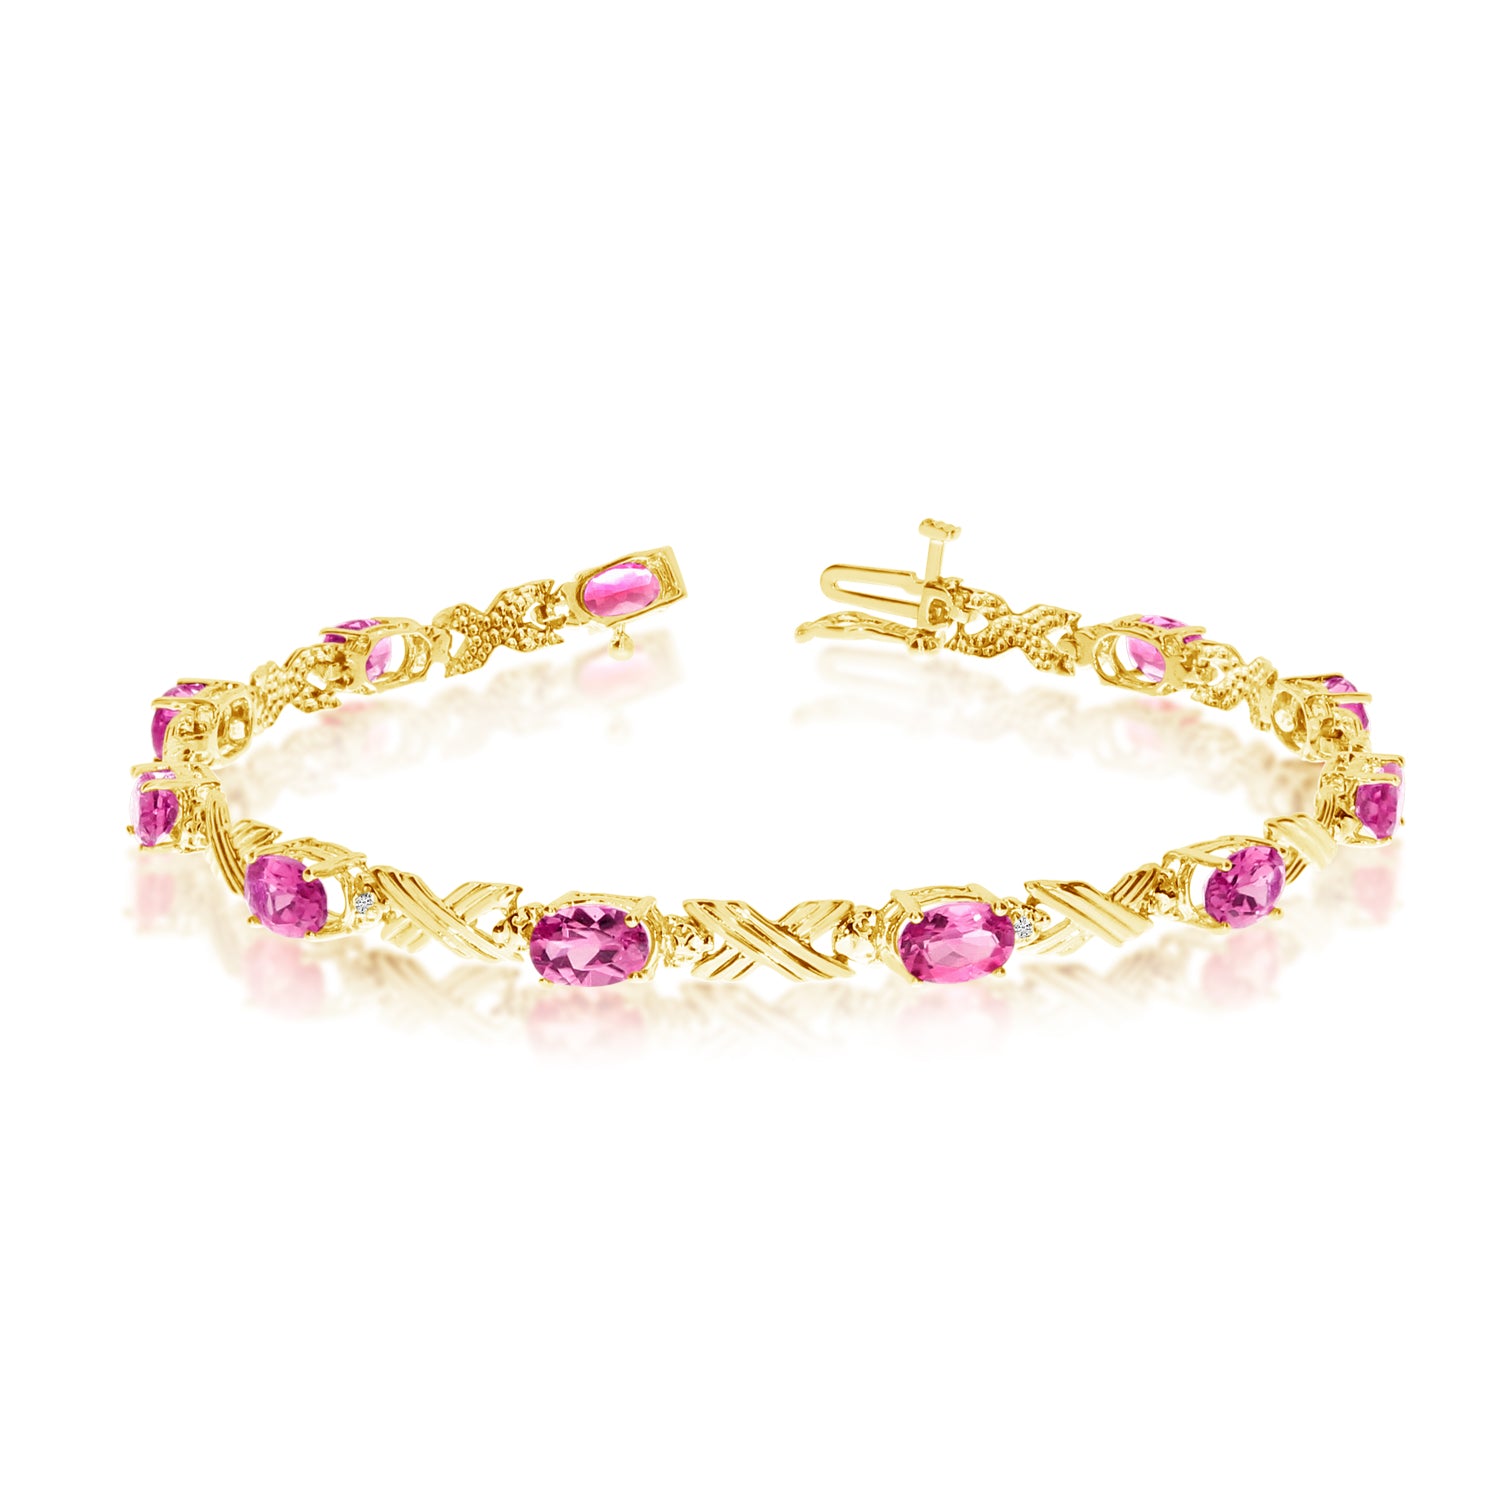 10K Yellow Gold Oval Pink Topaz Stones And Diamonds Tennis Bracelet, 7" fine designer jewelry for men and women